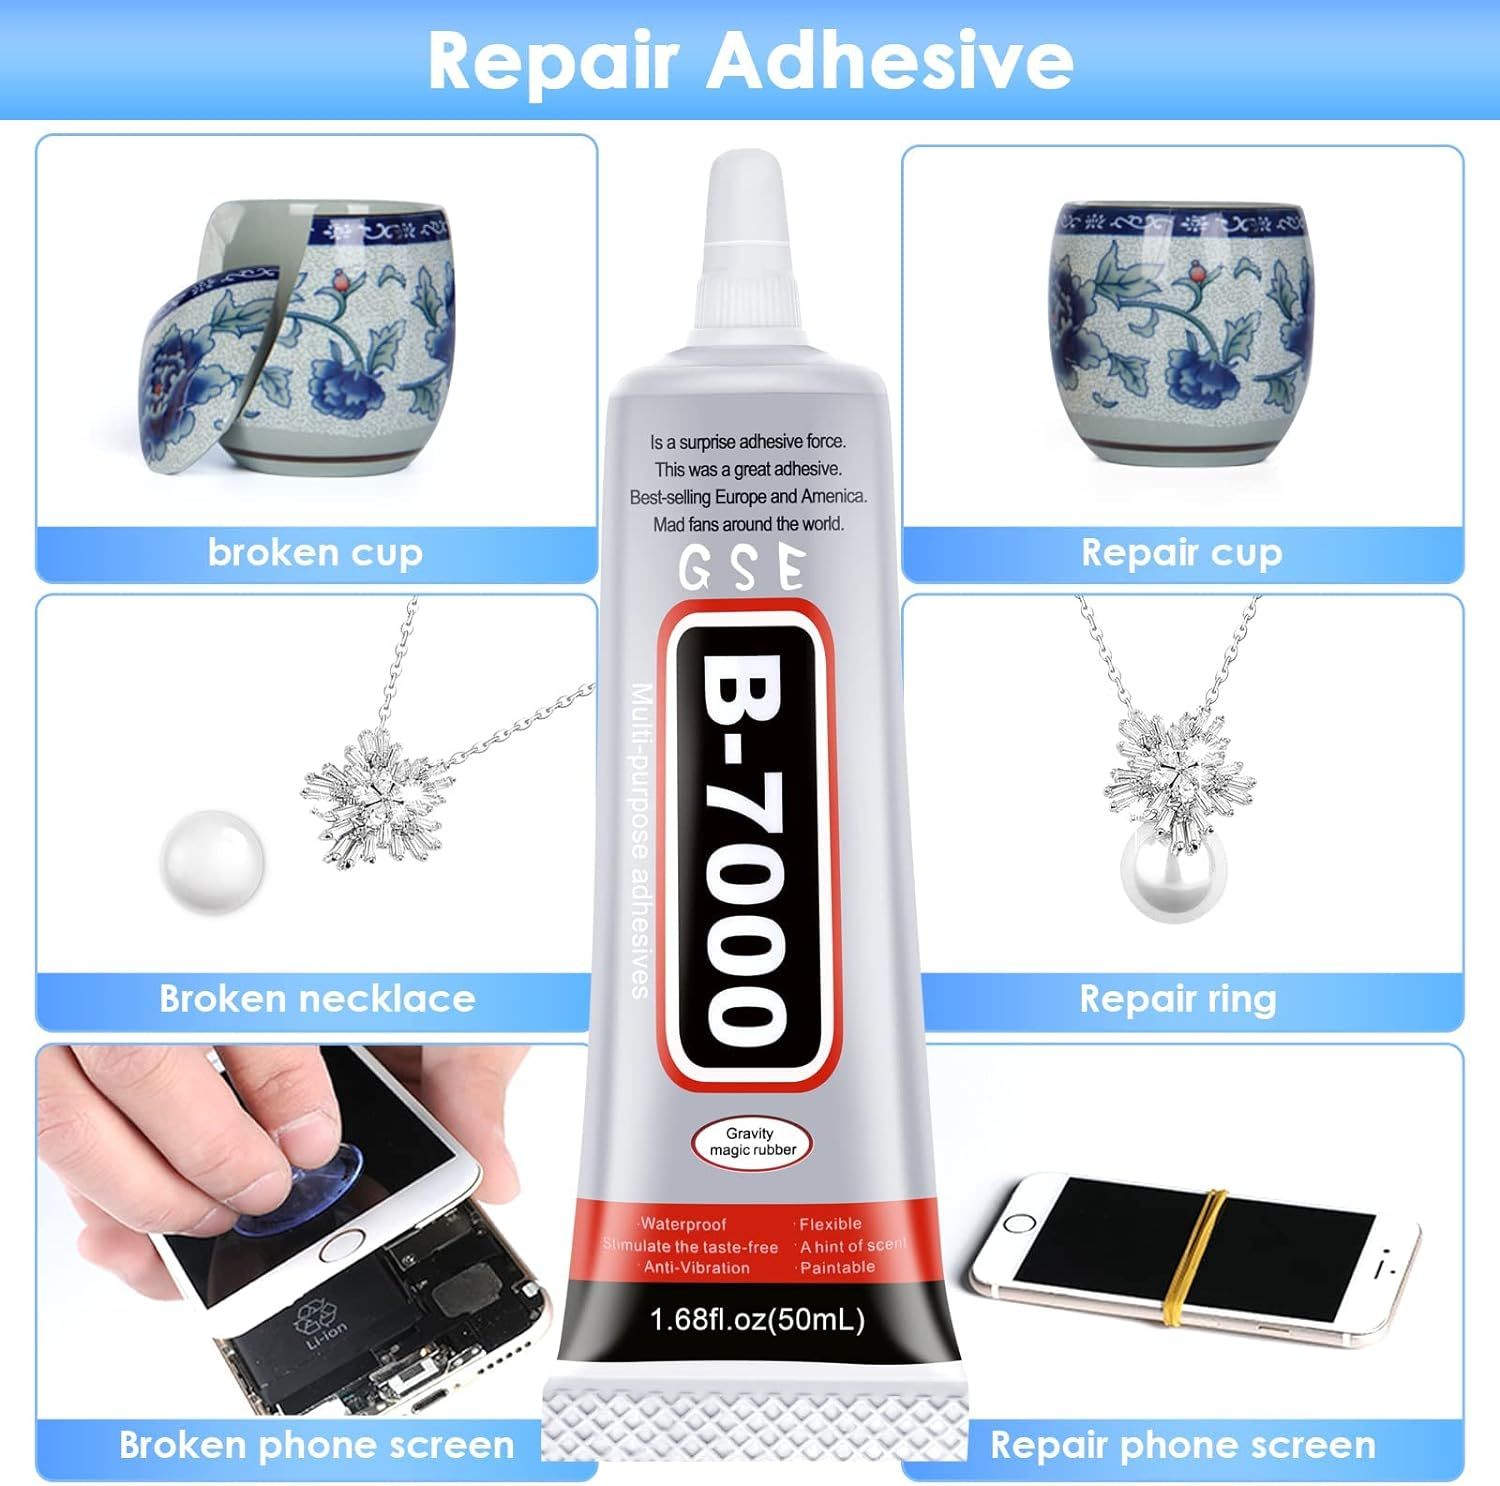 B7000 Jewelry Glue, 4PCS X 25ML B-7000 Clear Super Glue Multi-Function  Glues Transparent Industrial Adhesive for Phone Repair Jewelery Making  Crafts